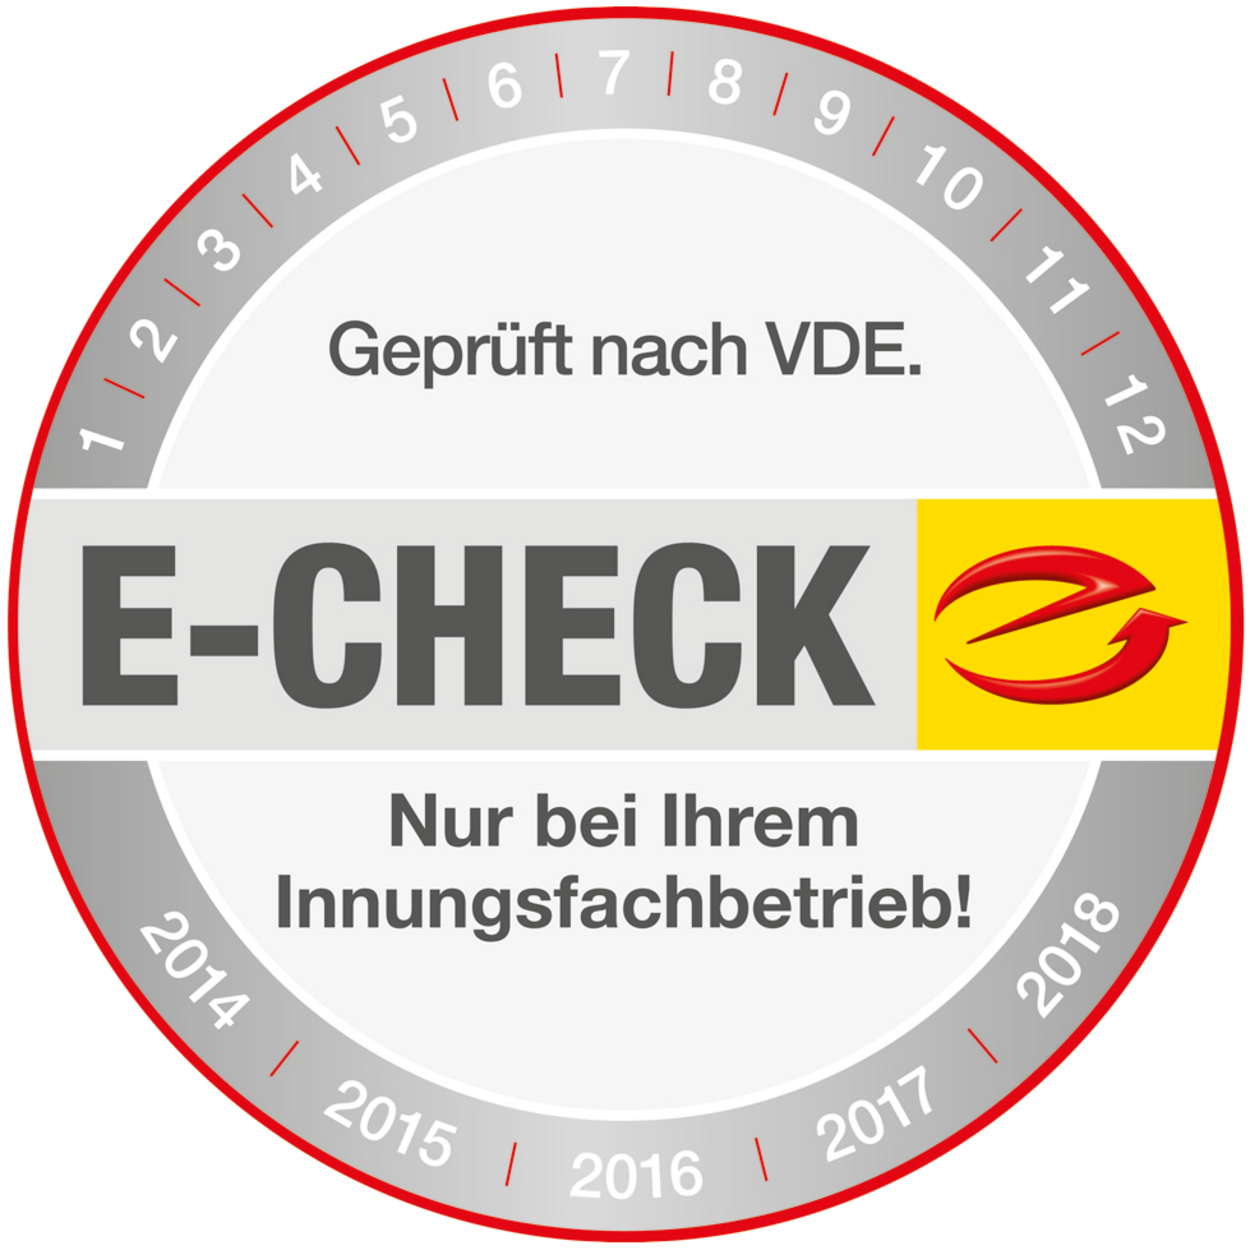 Der E-Check bei ElektroService Rauh GmbH in Ossig